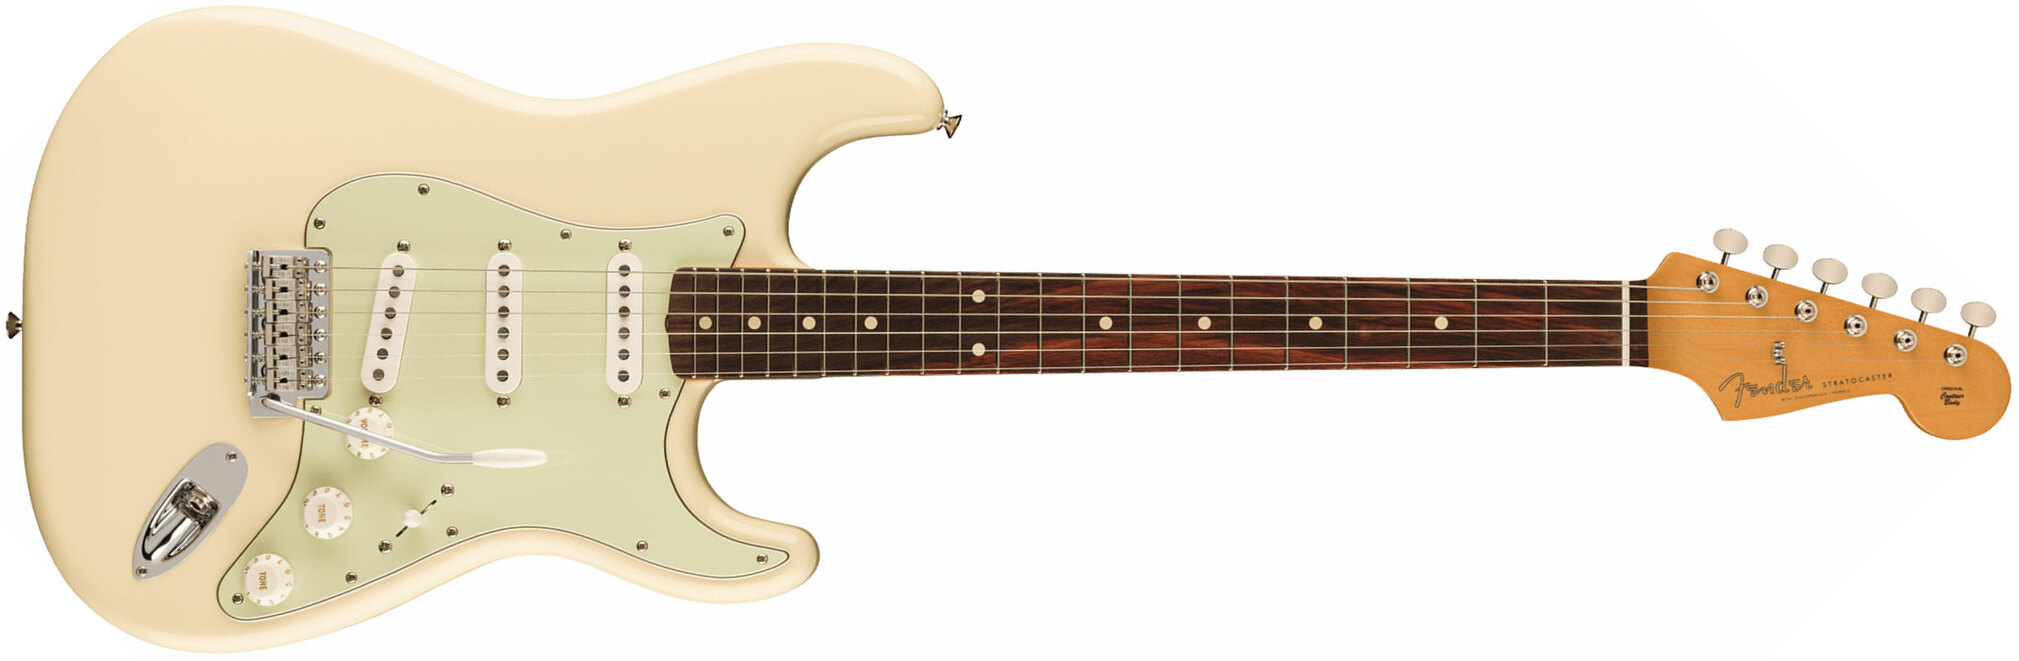 Fender Strat 60s Vintera 2 Mex 3s Trem Rw - Olympic White - E-Gitarre in Str-Form - Main picture